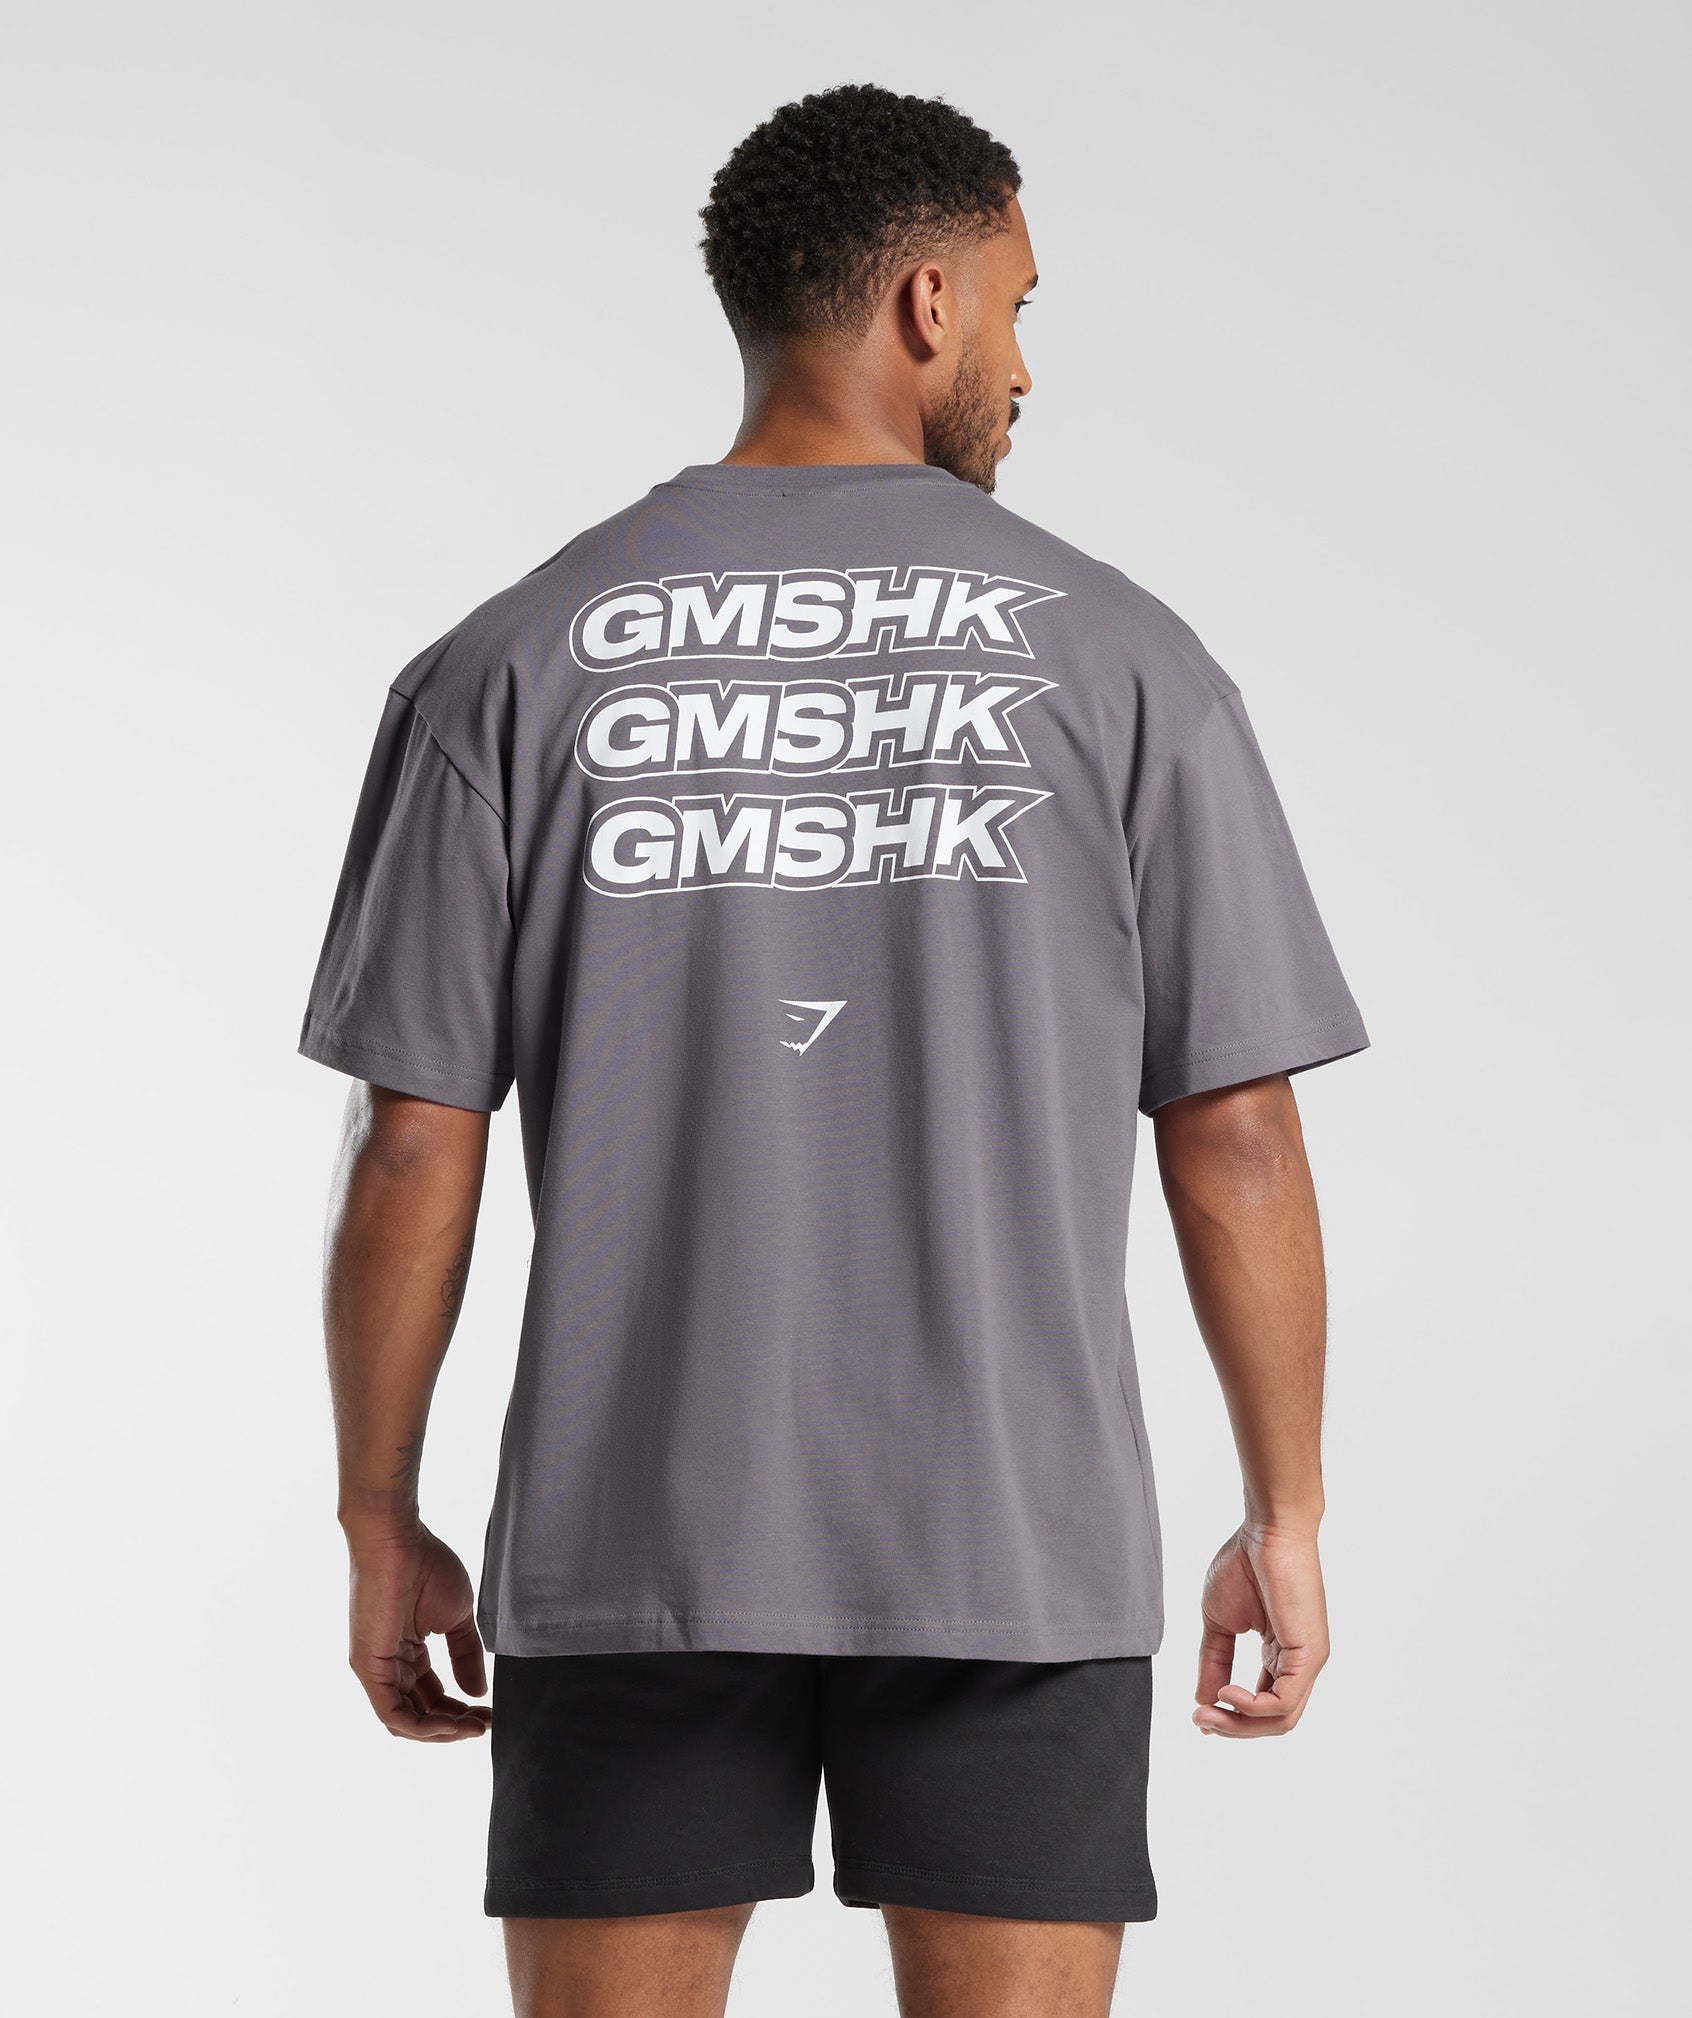 GMSHK Oversized T-Shirt in Titanium Grey